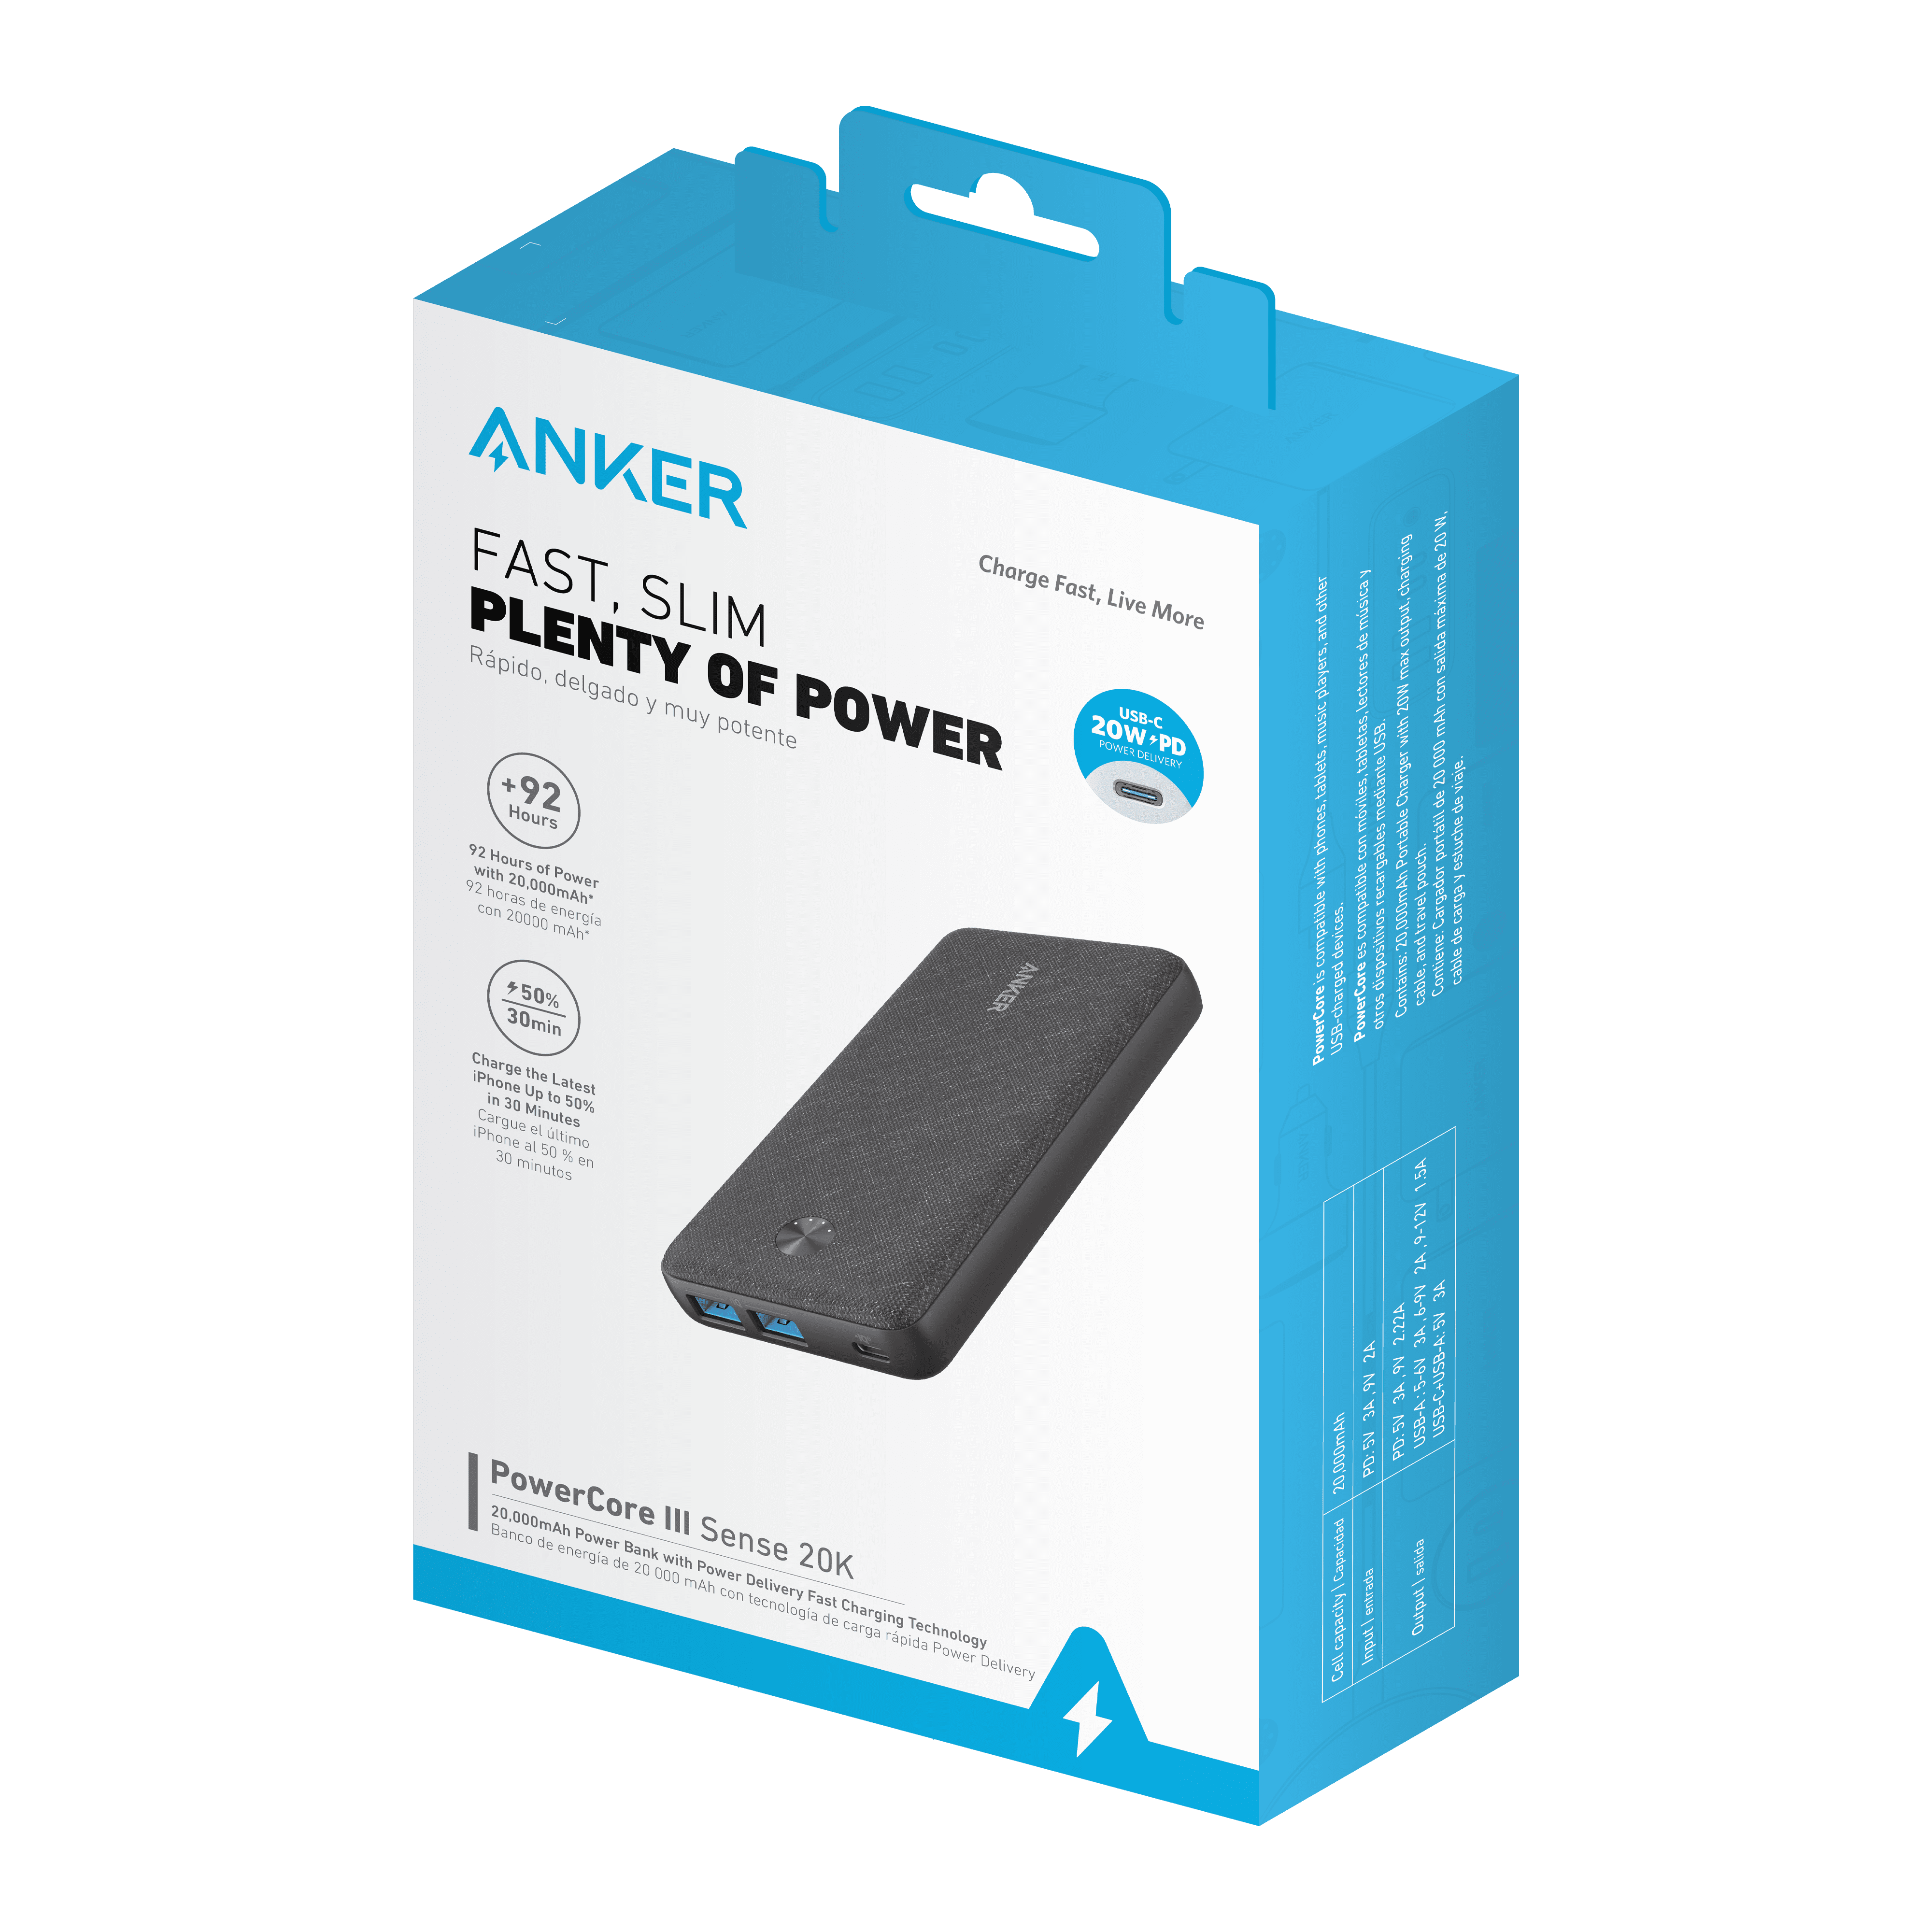 Anker Prime 20,000mAh Power Bank (200W) review